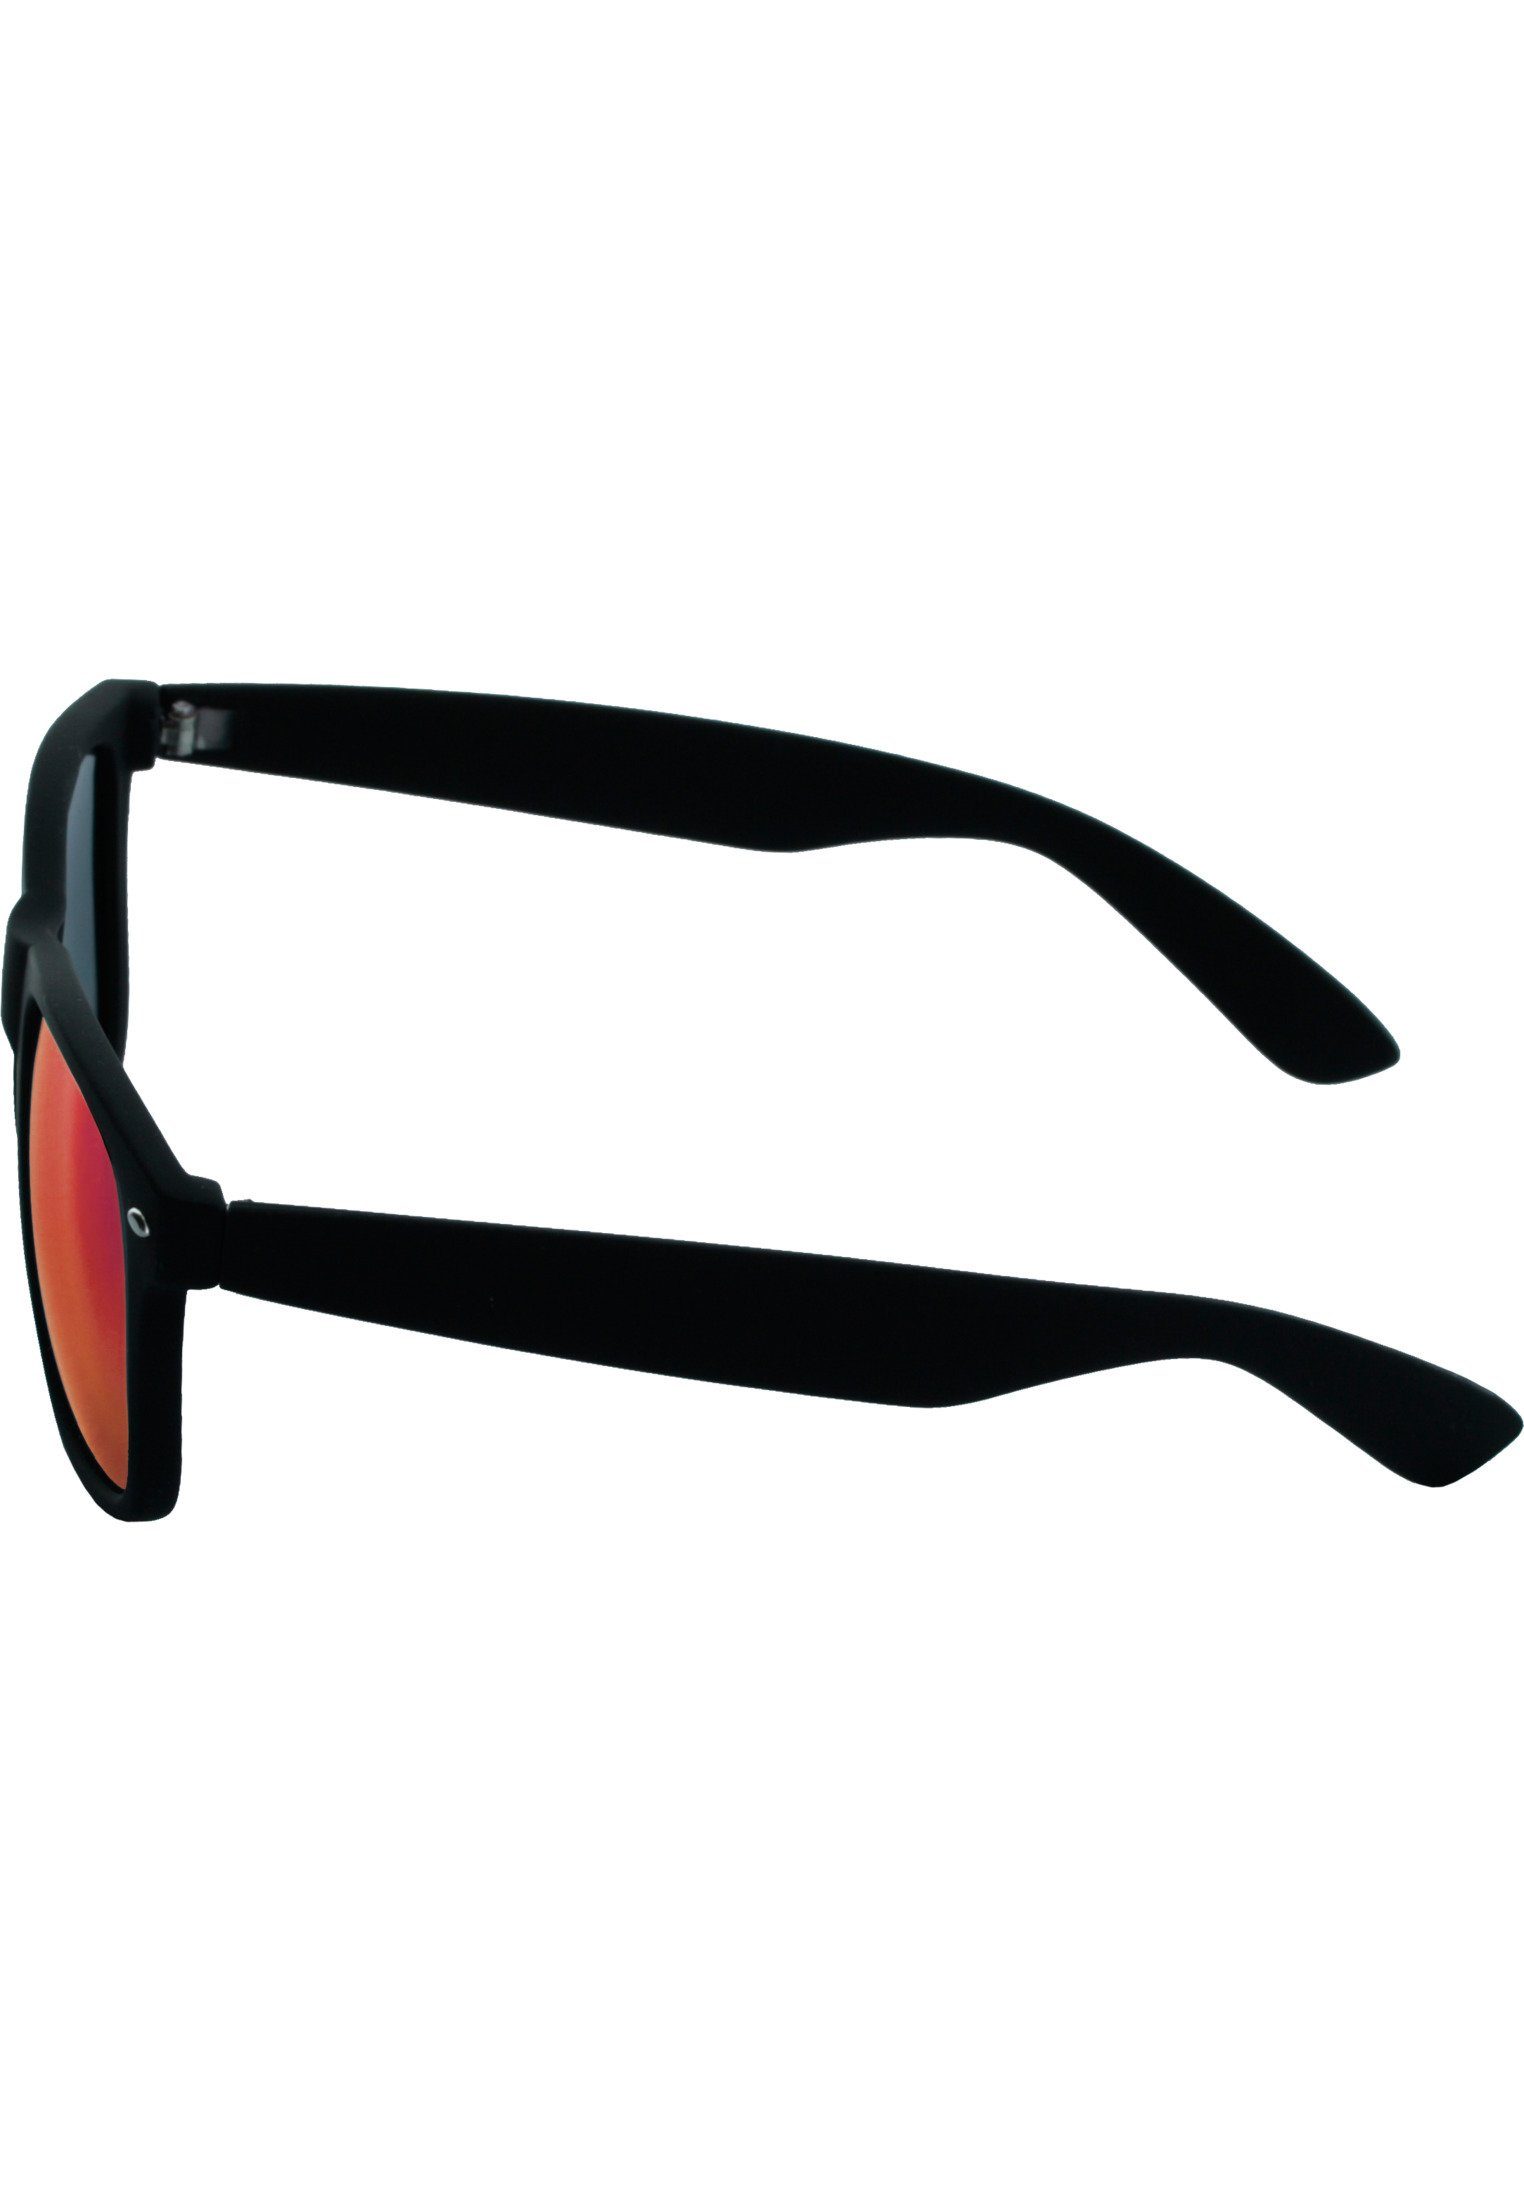 Likoma Sonnenbrille Sunglasses blk/red MSTRDS Accessoires Mirror